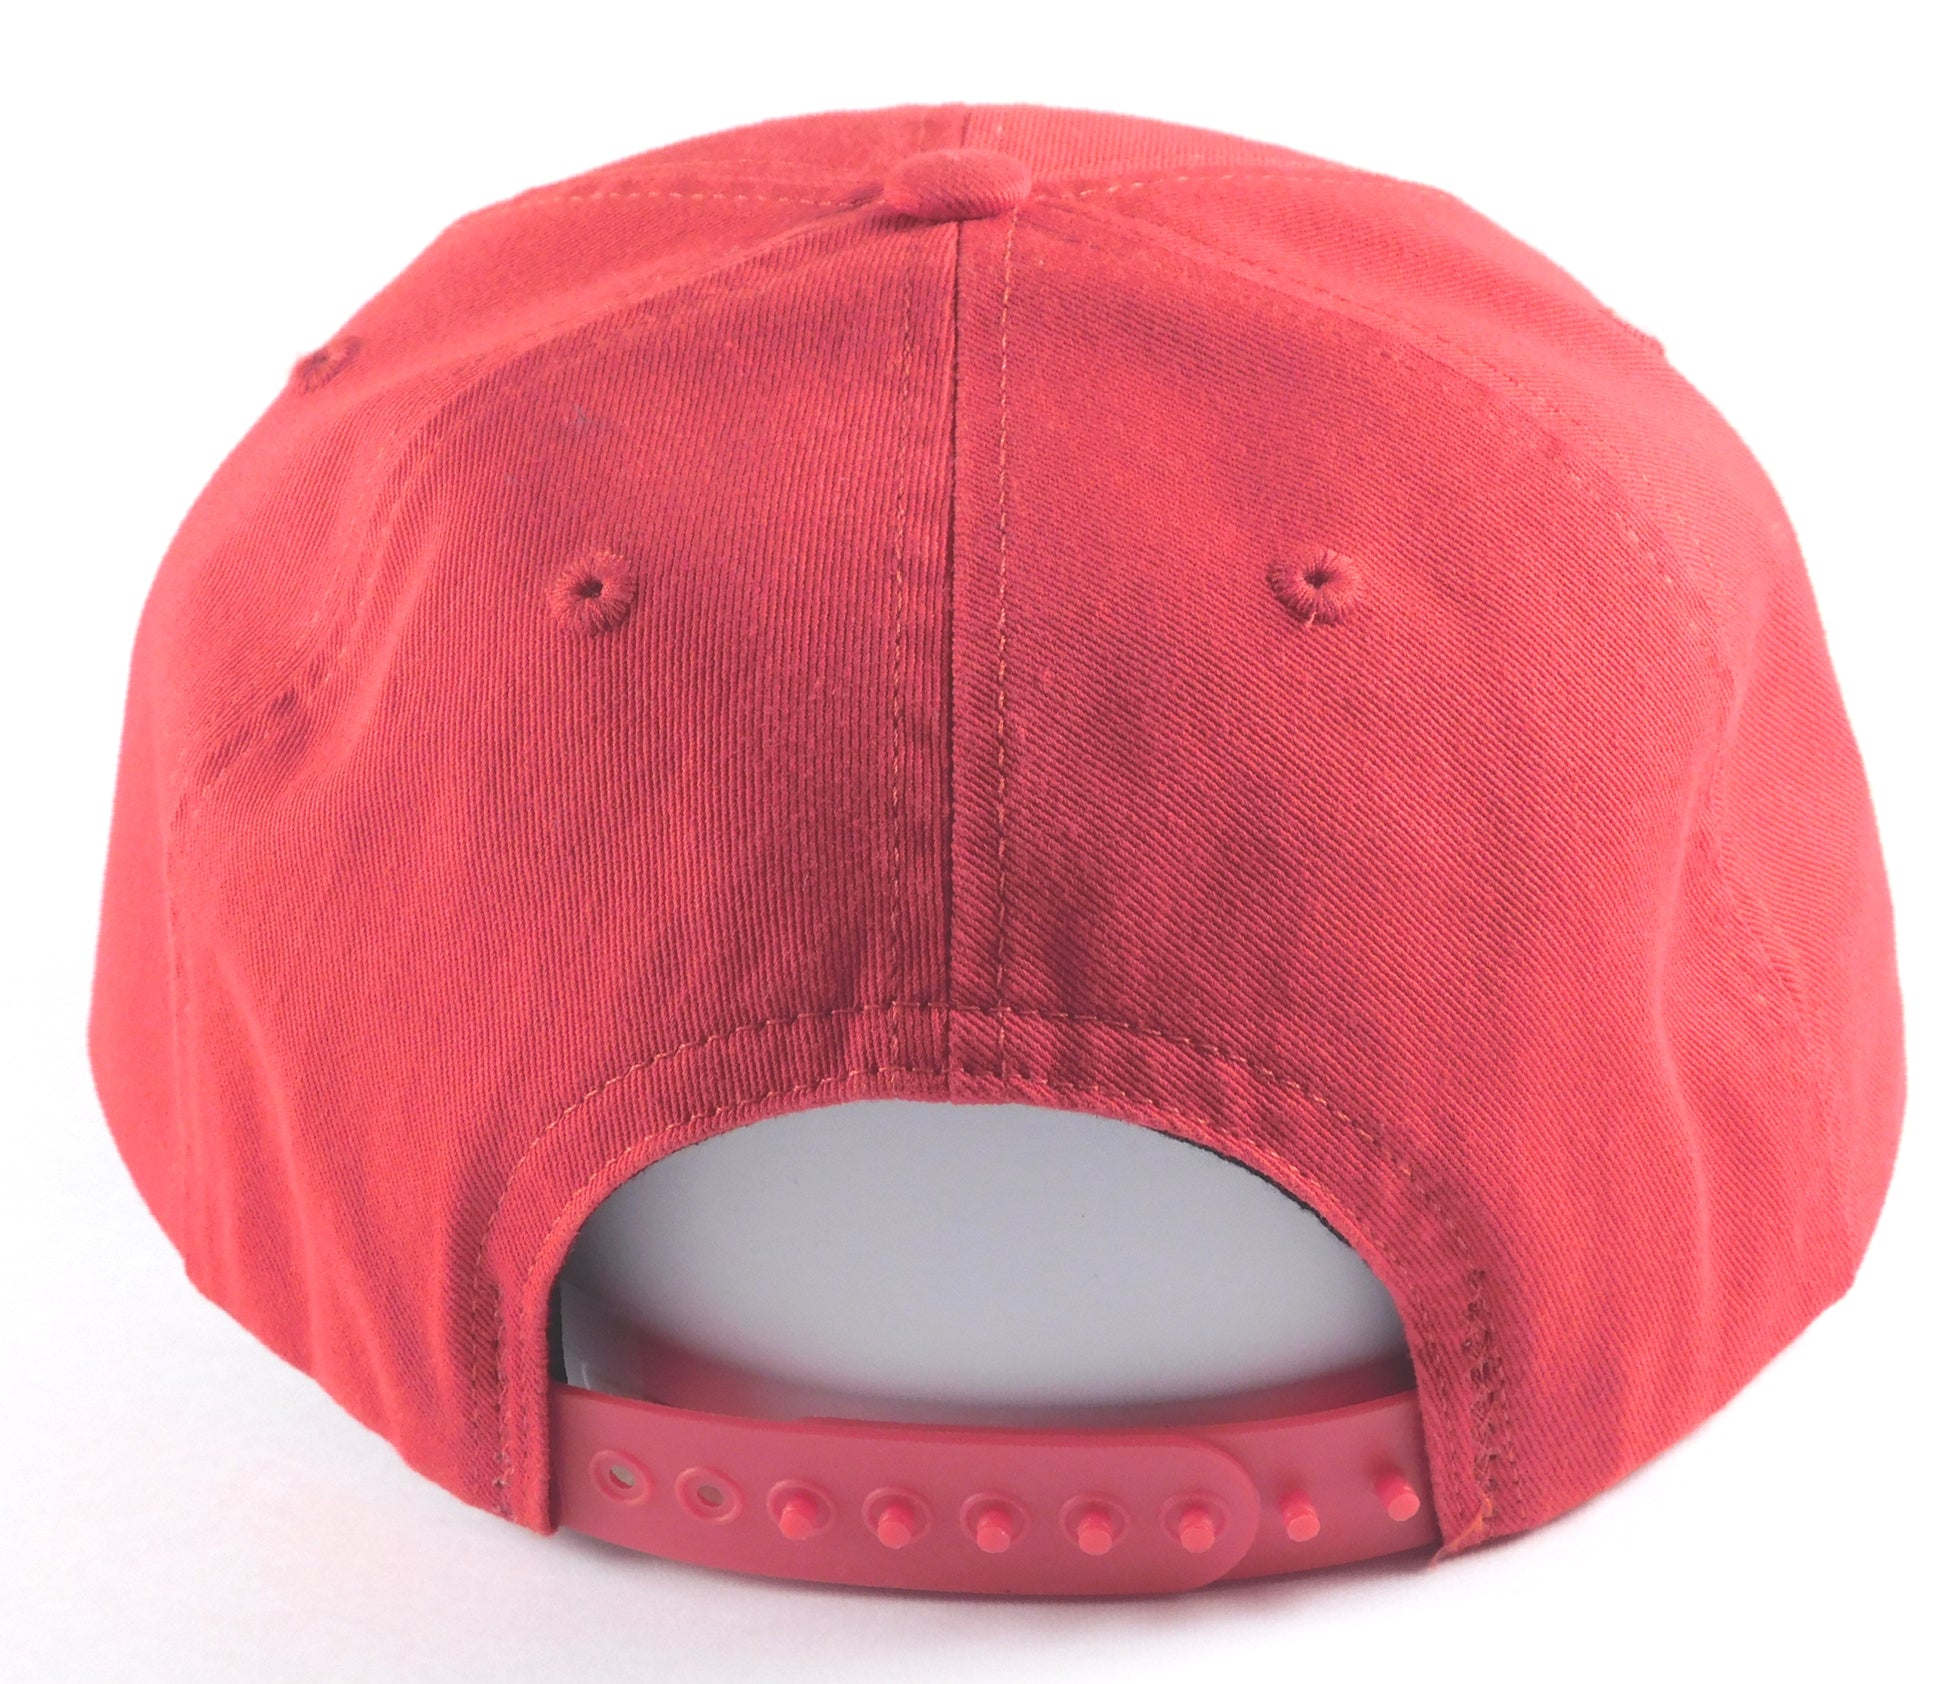 red dad hat